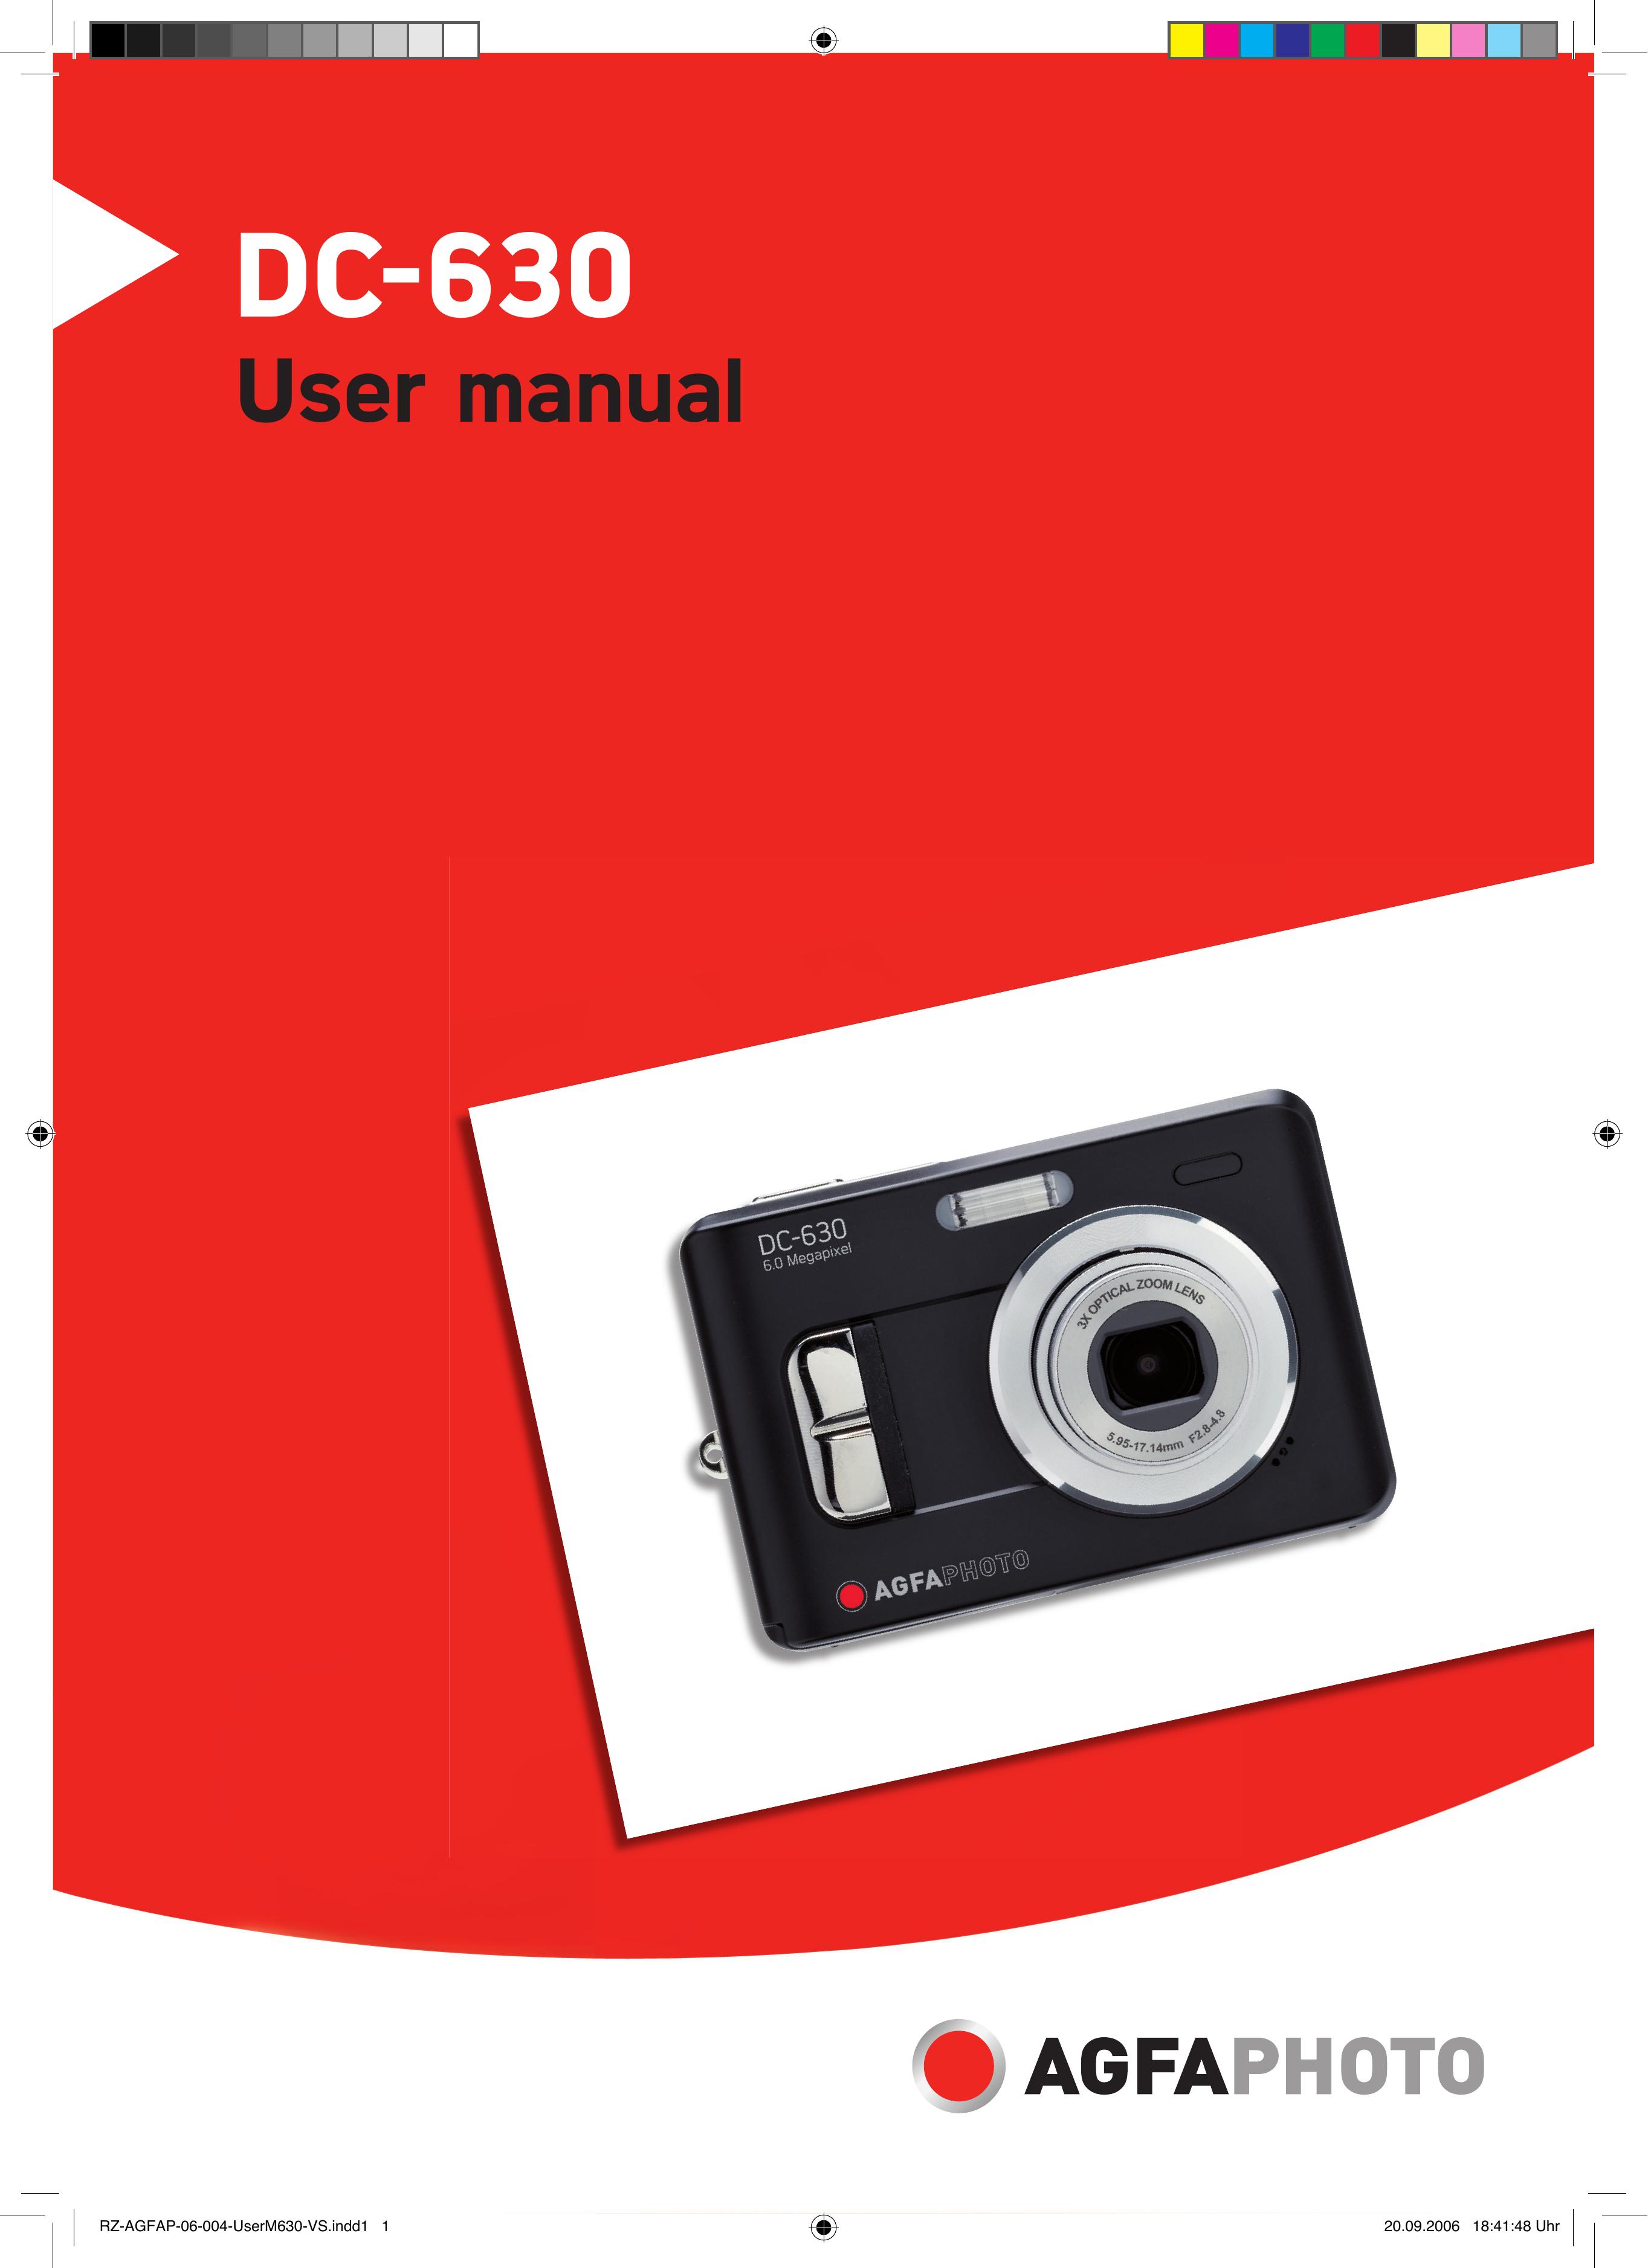 AGFA DC-630 Digital Camera User Manual